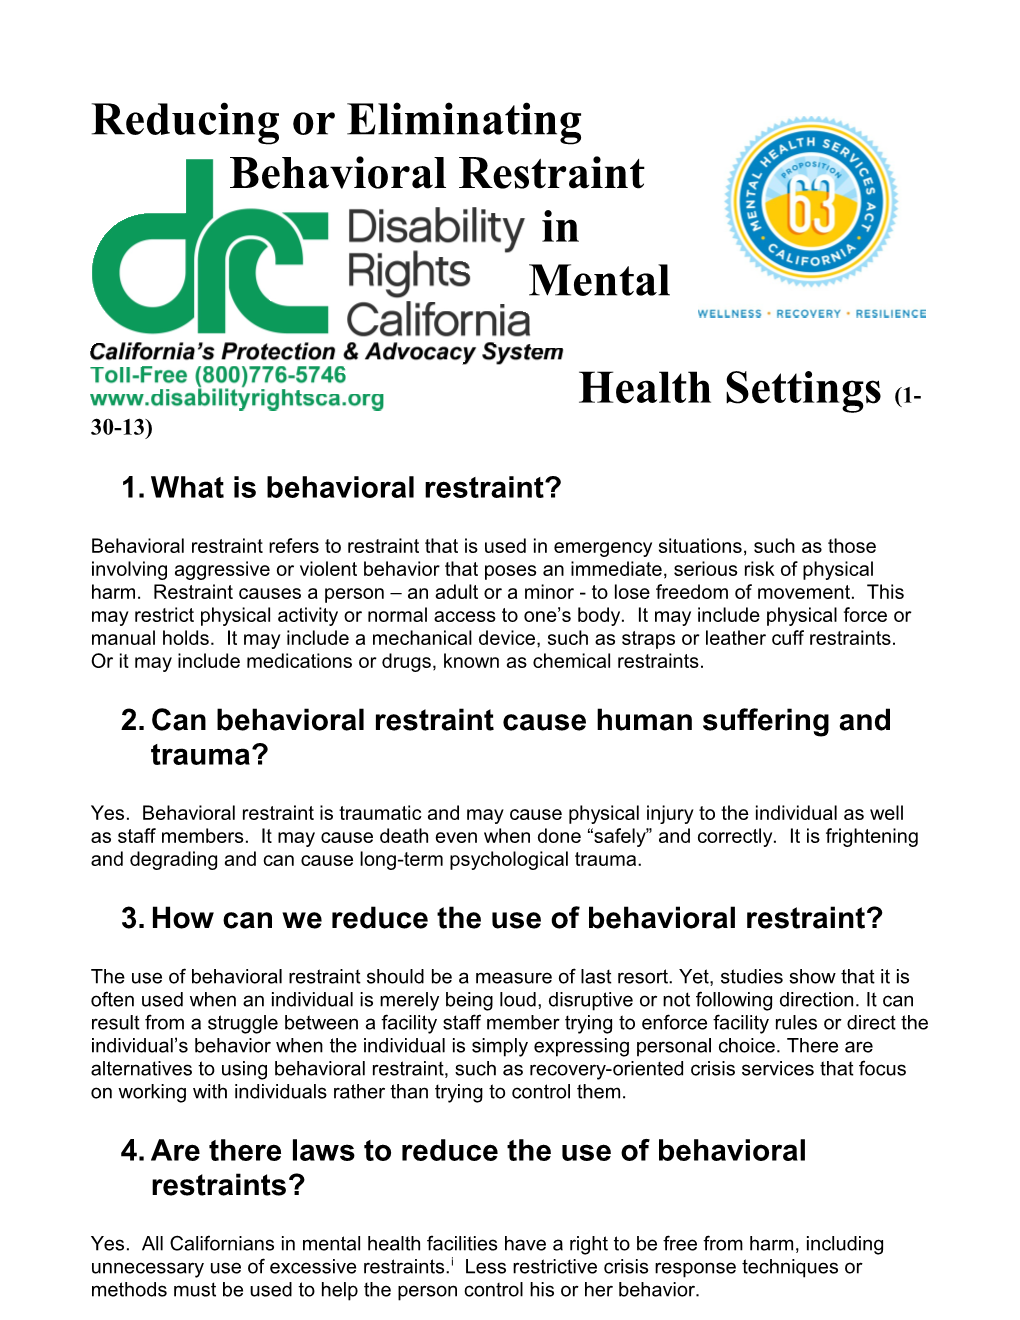 Reducing Or Eliminating Behavioral Restraint in Mental Health Settings